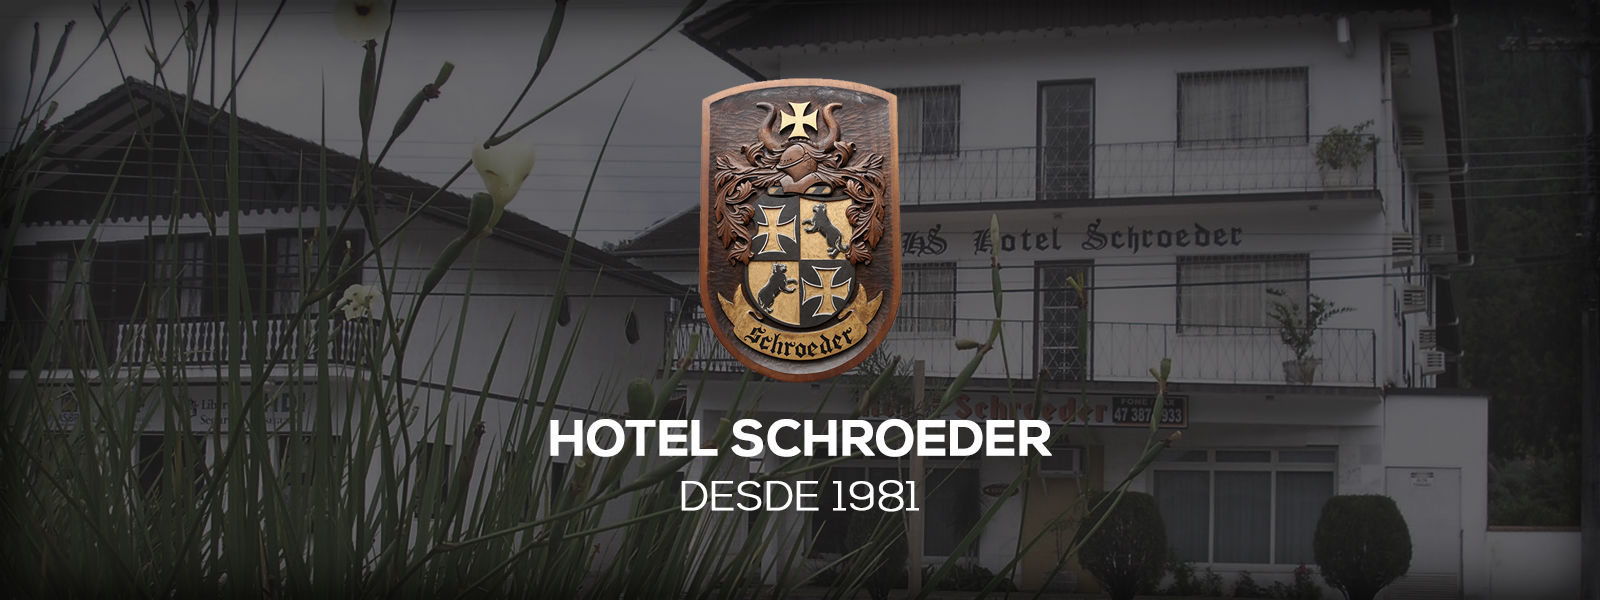 Hotel Schroeder em Pomerode - Desde 1981